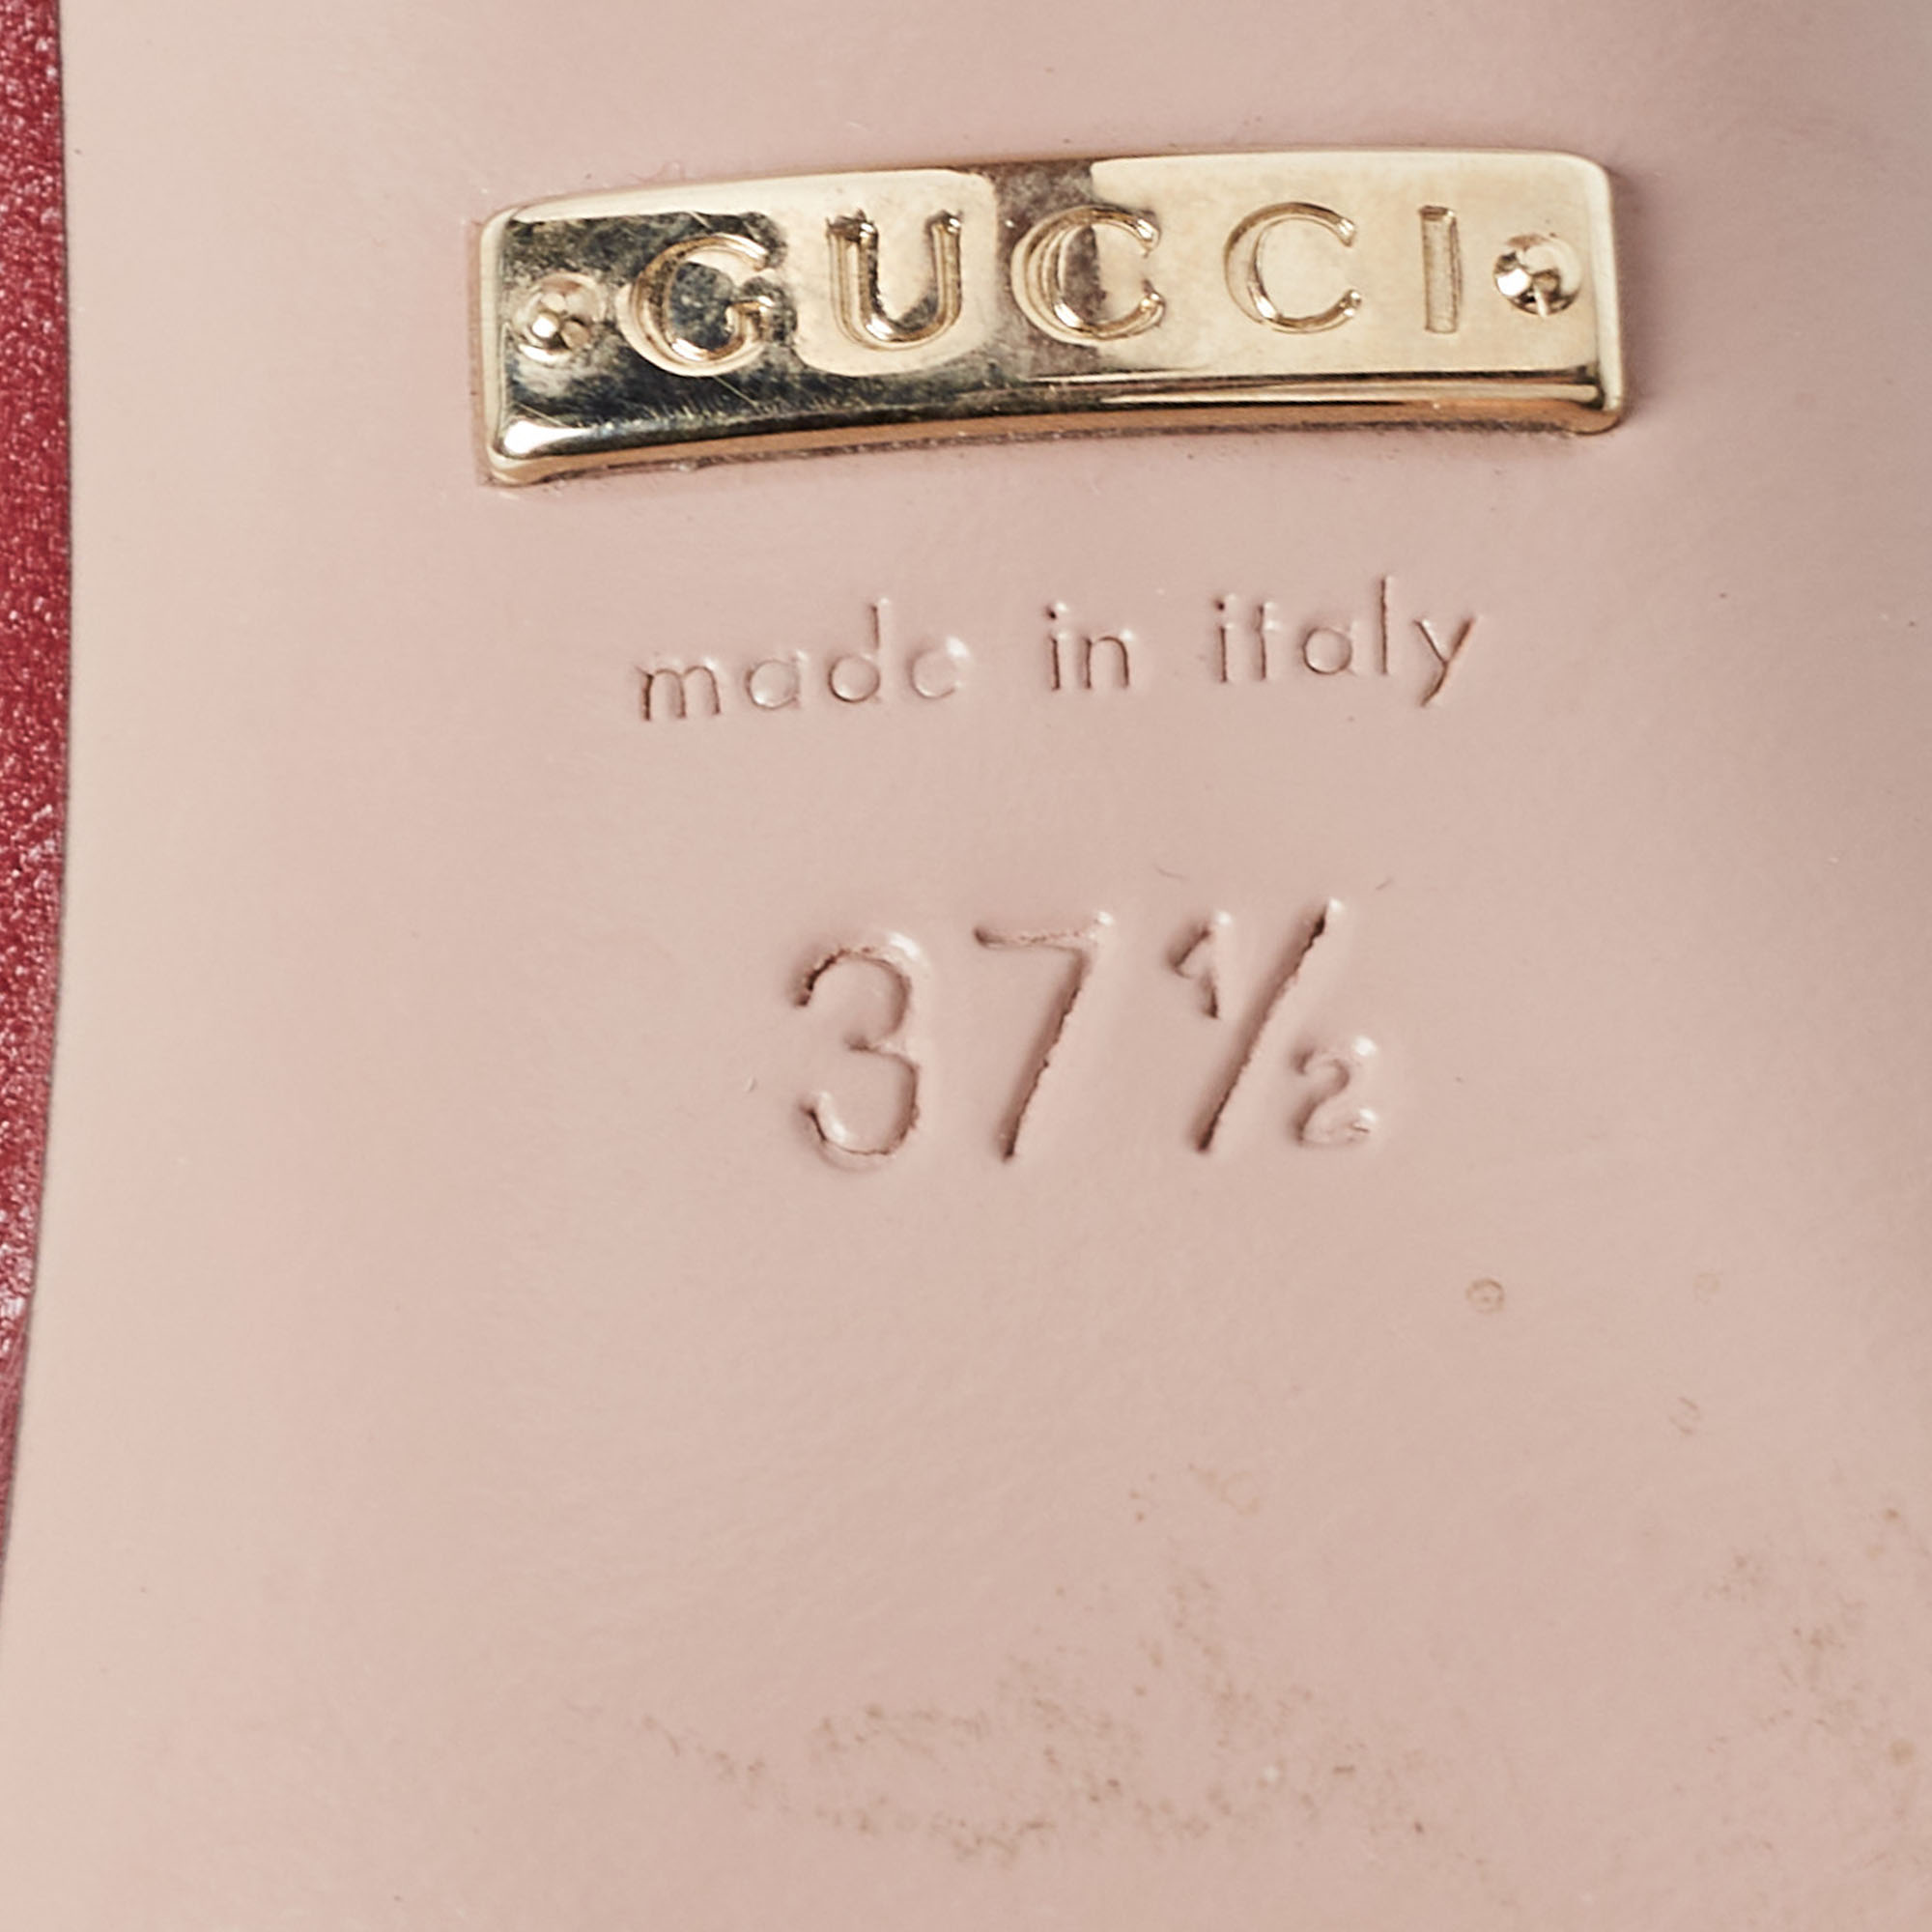 Gucci Burgundy Leather Jolene Peep Toe Pumps Size 37.5